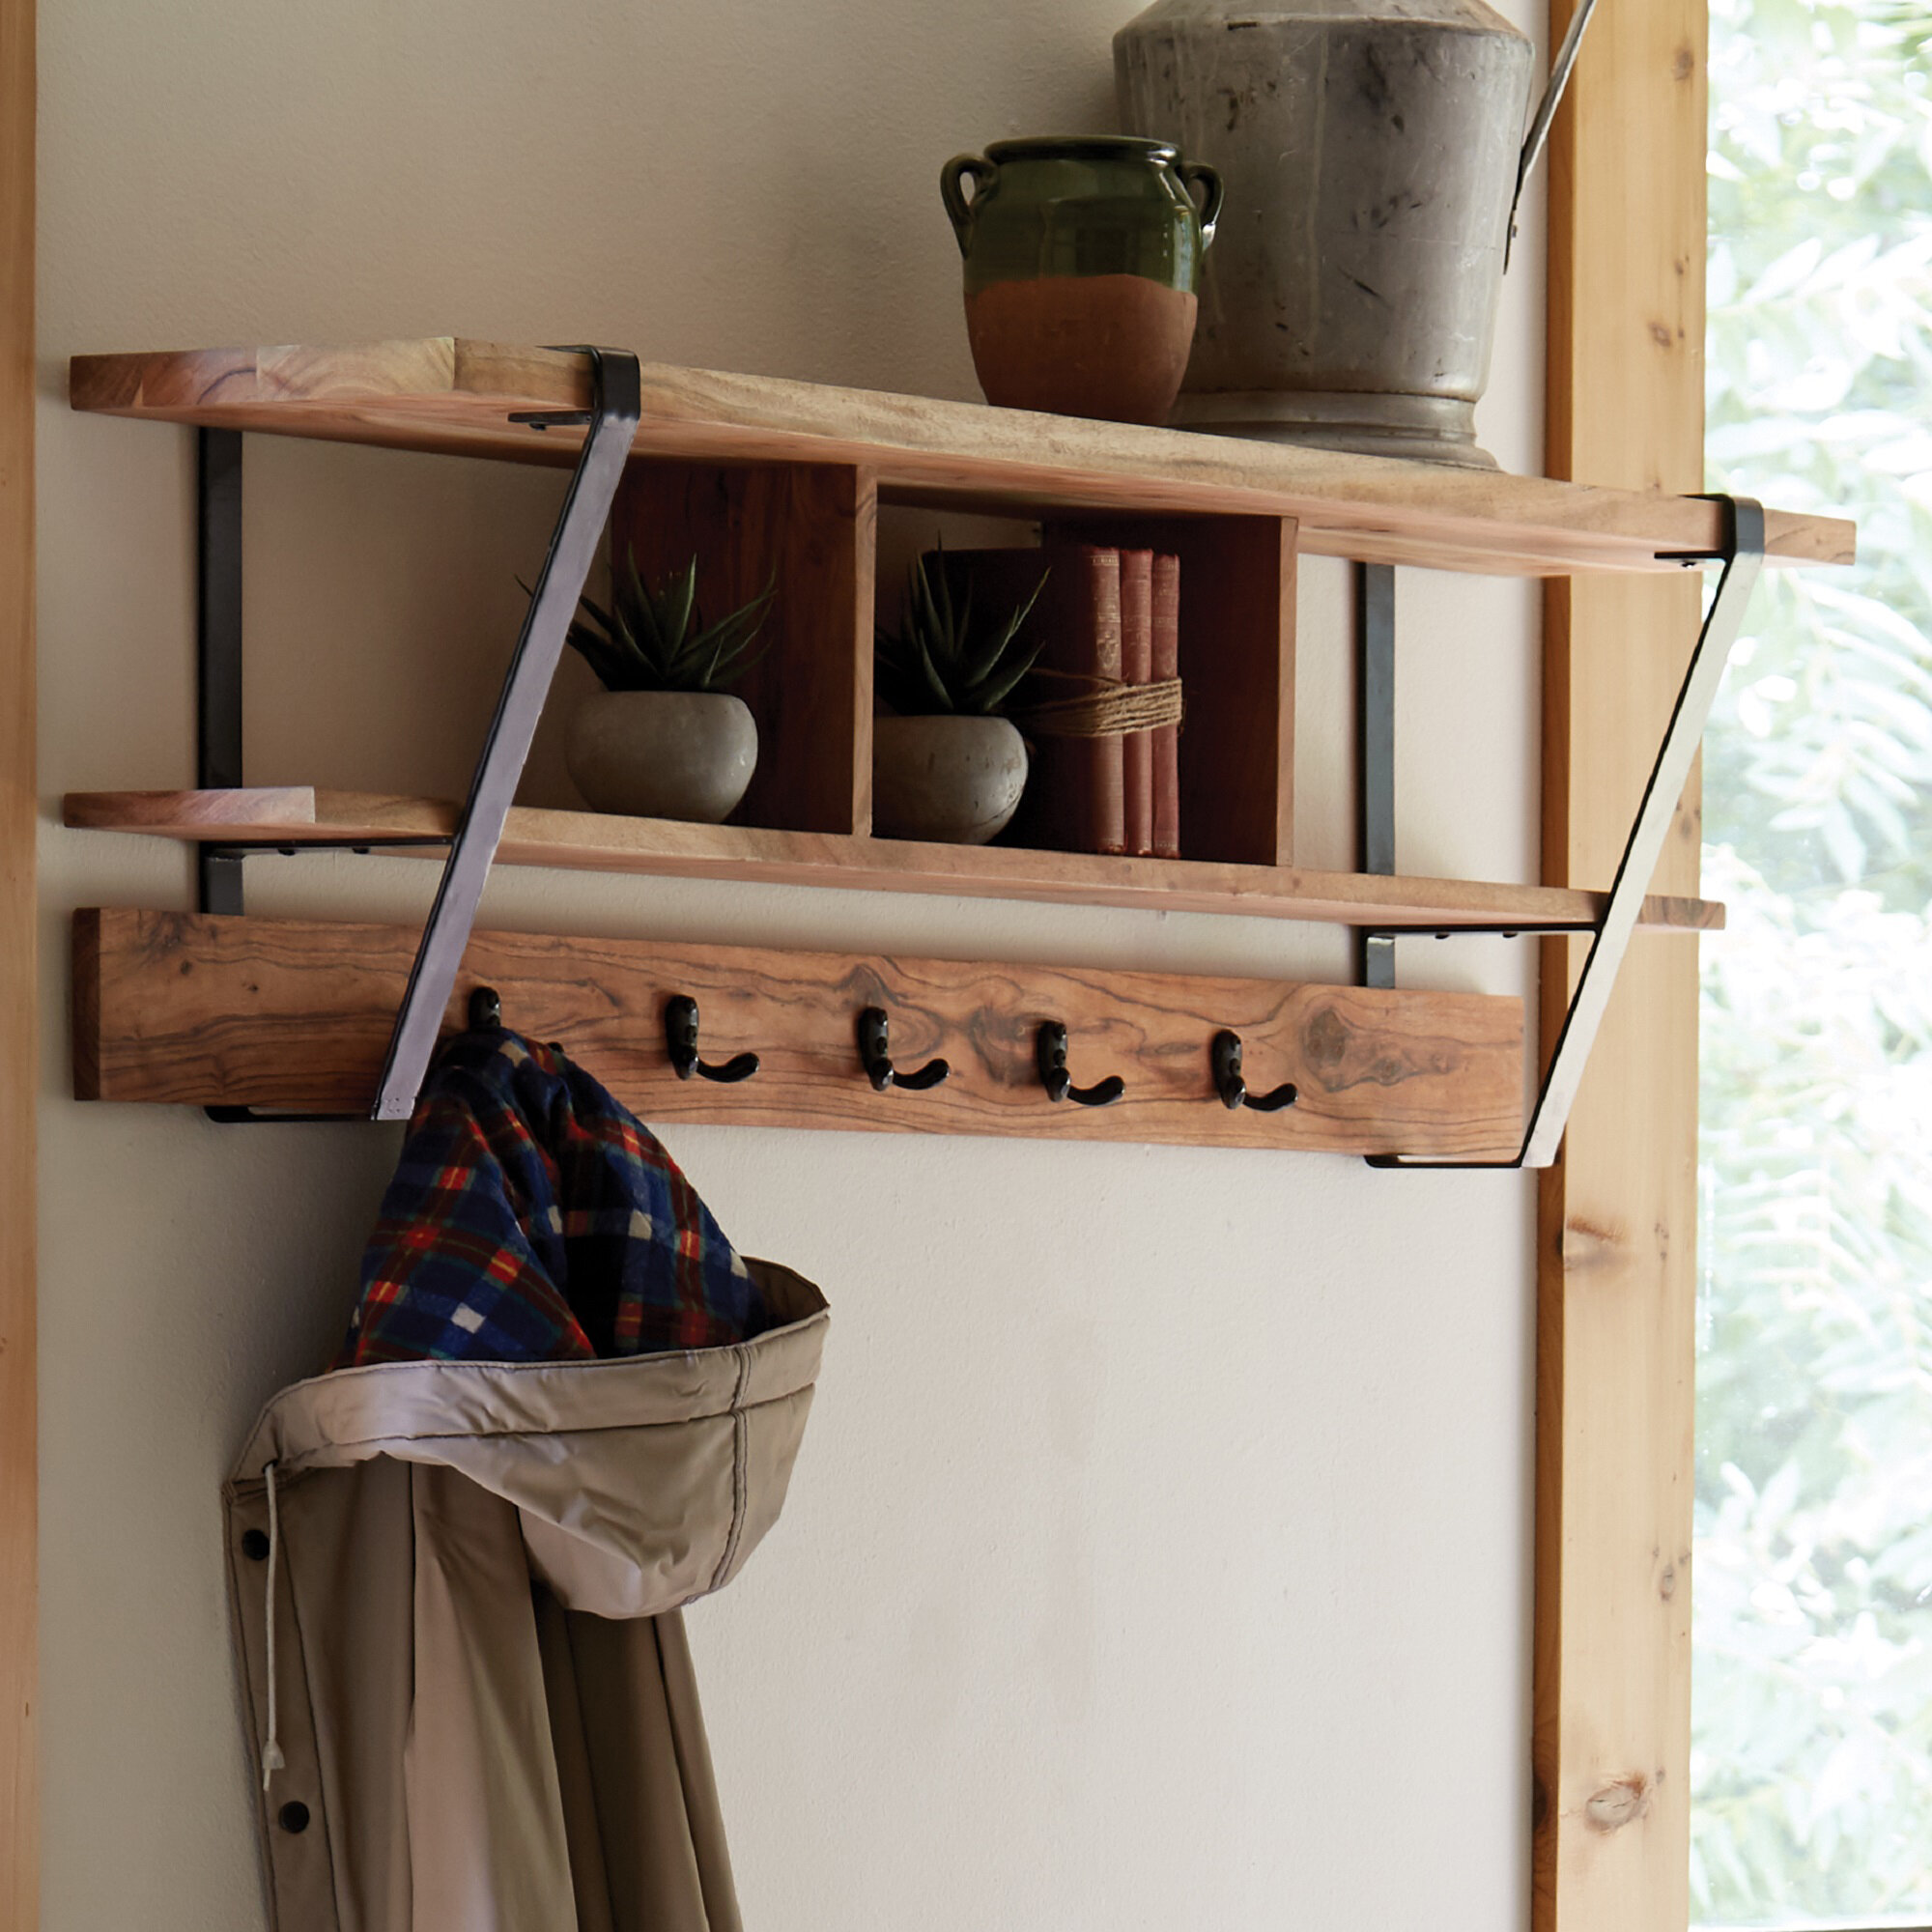 wall coat hanger with shelf